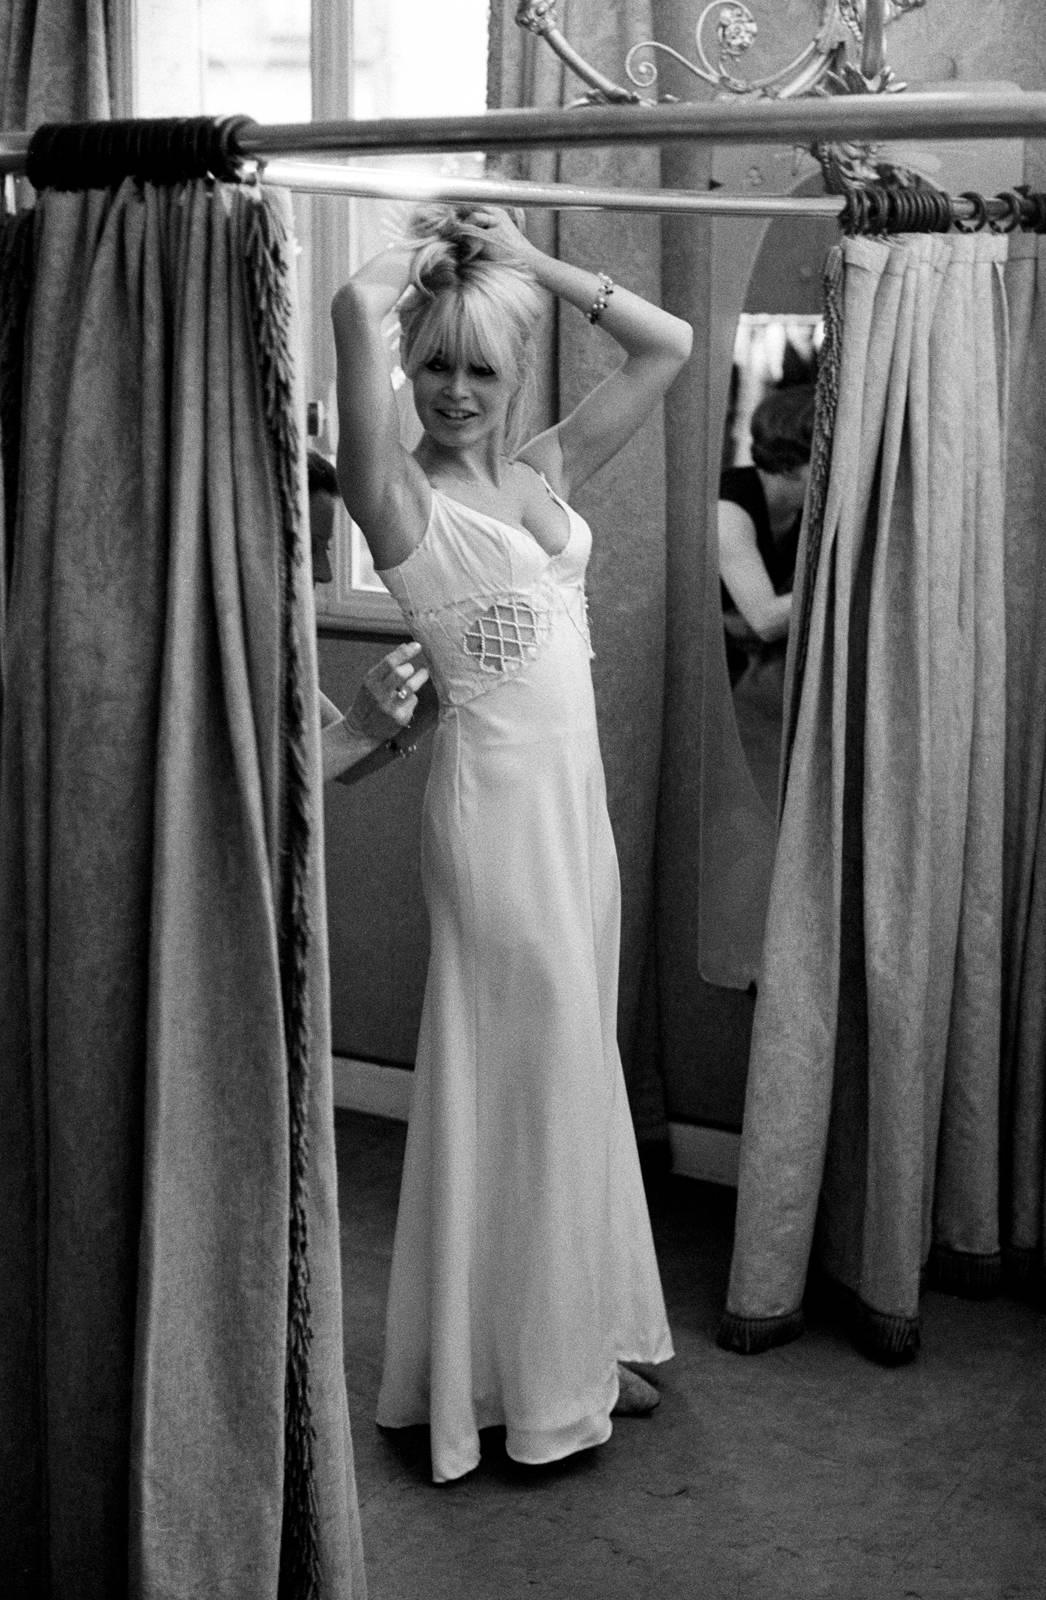 Ghislain Dussart Portrait Photograph - Bardot's Dress